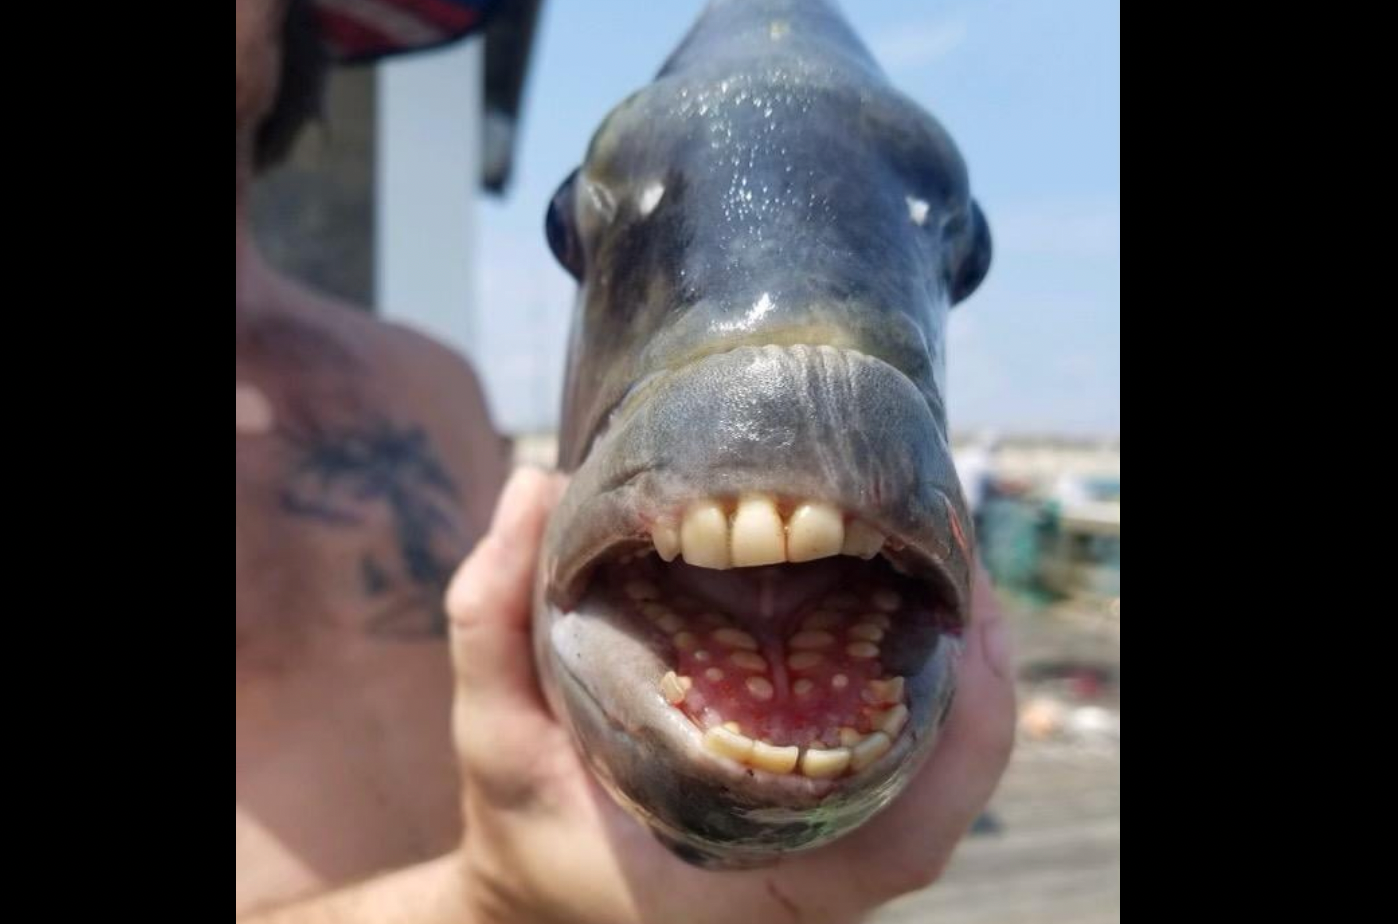 Fish with terrifying teeth